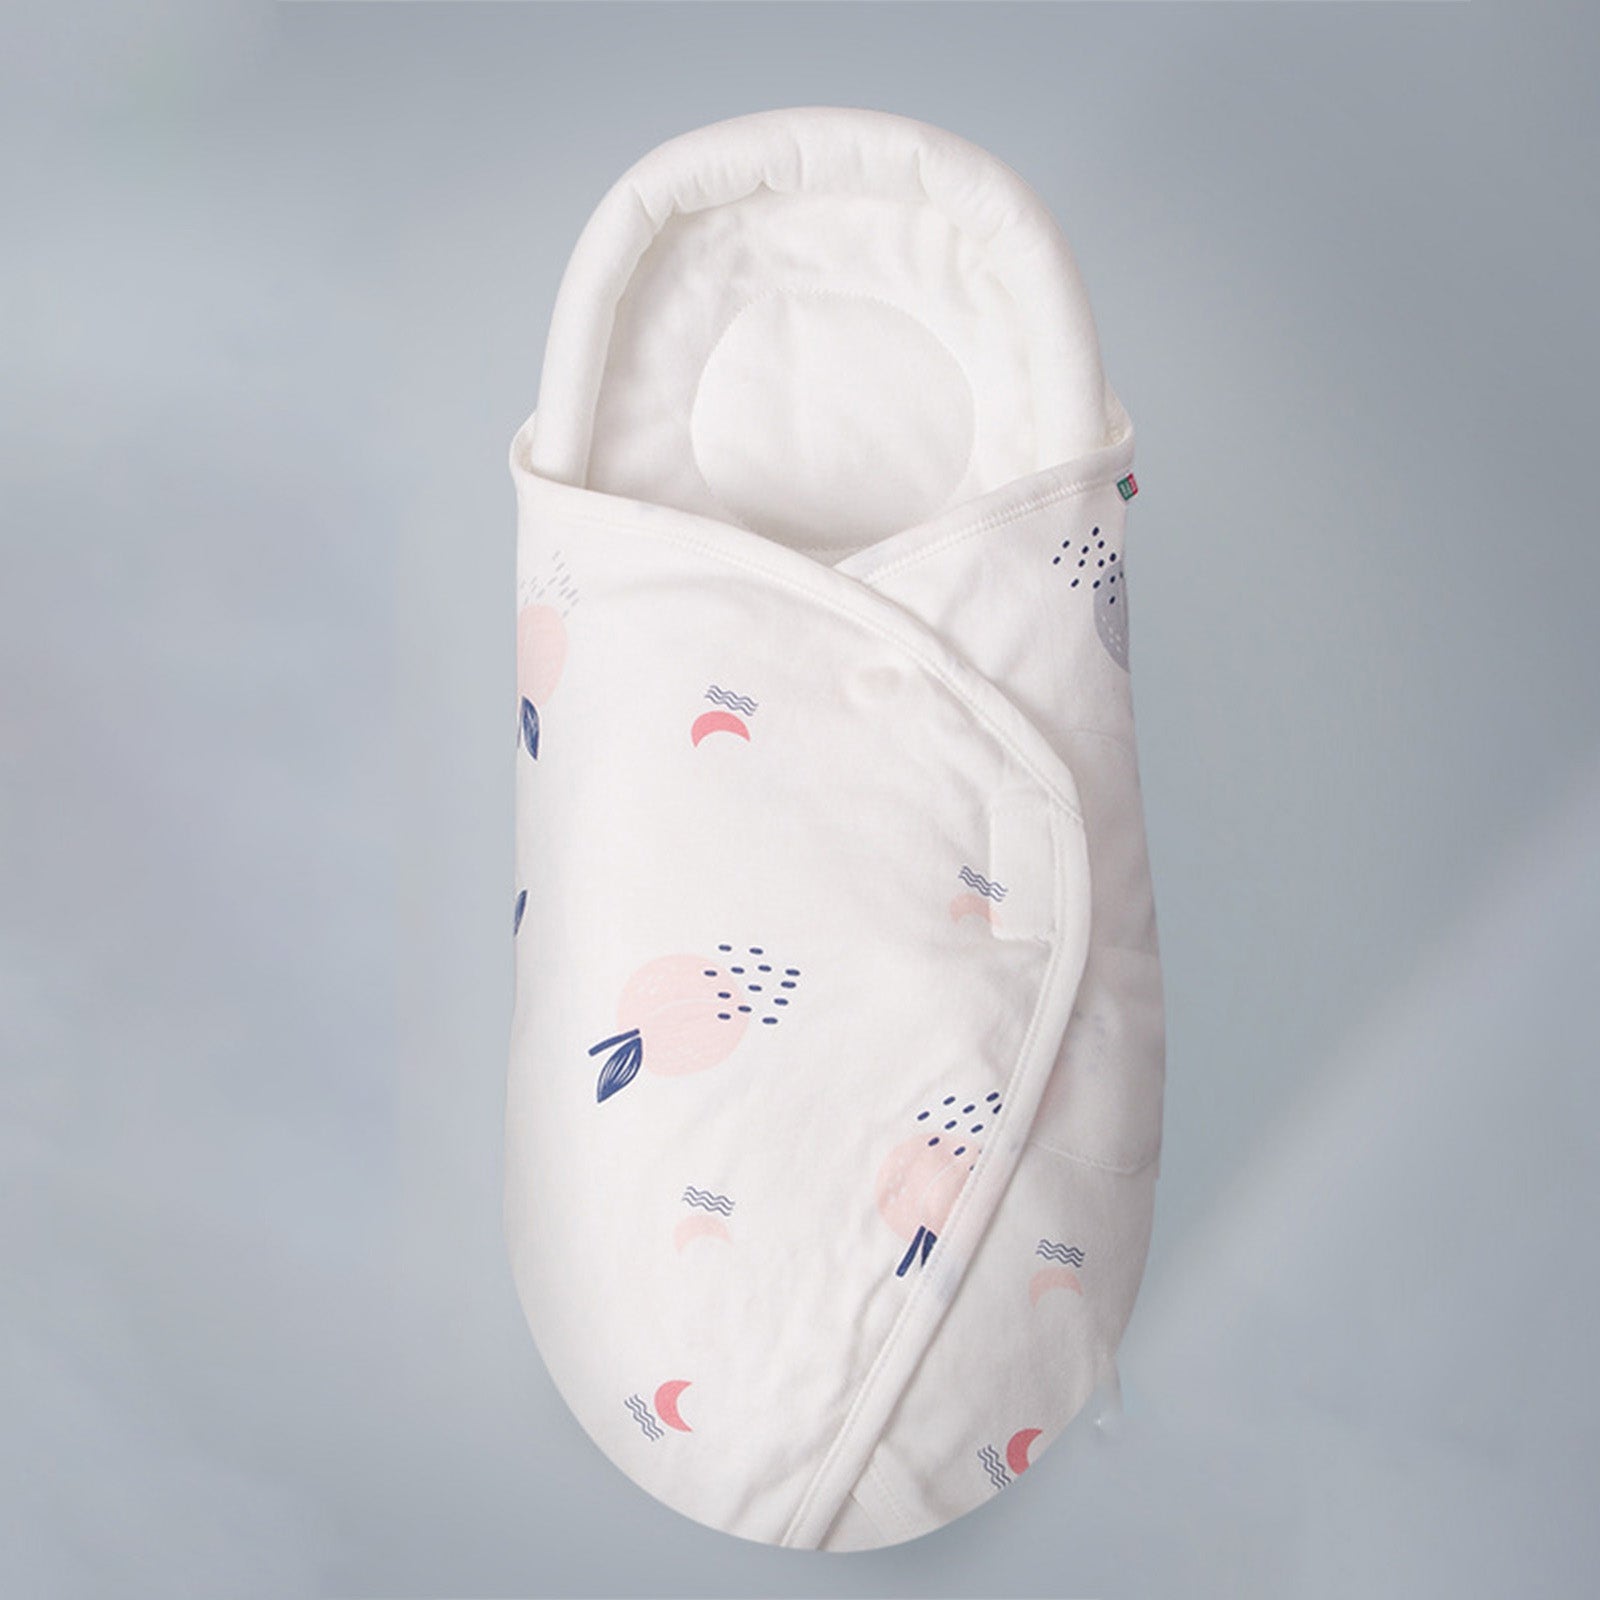 Tiny cuddling Sleepsack Swaddle, 100% Cotton 3-Way Adjustable Wearable Blanket,TOG 1.0,Small,0-3 Months，30*60cm